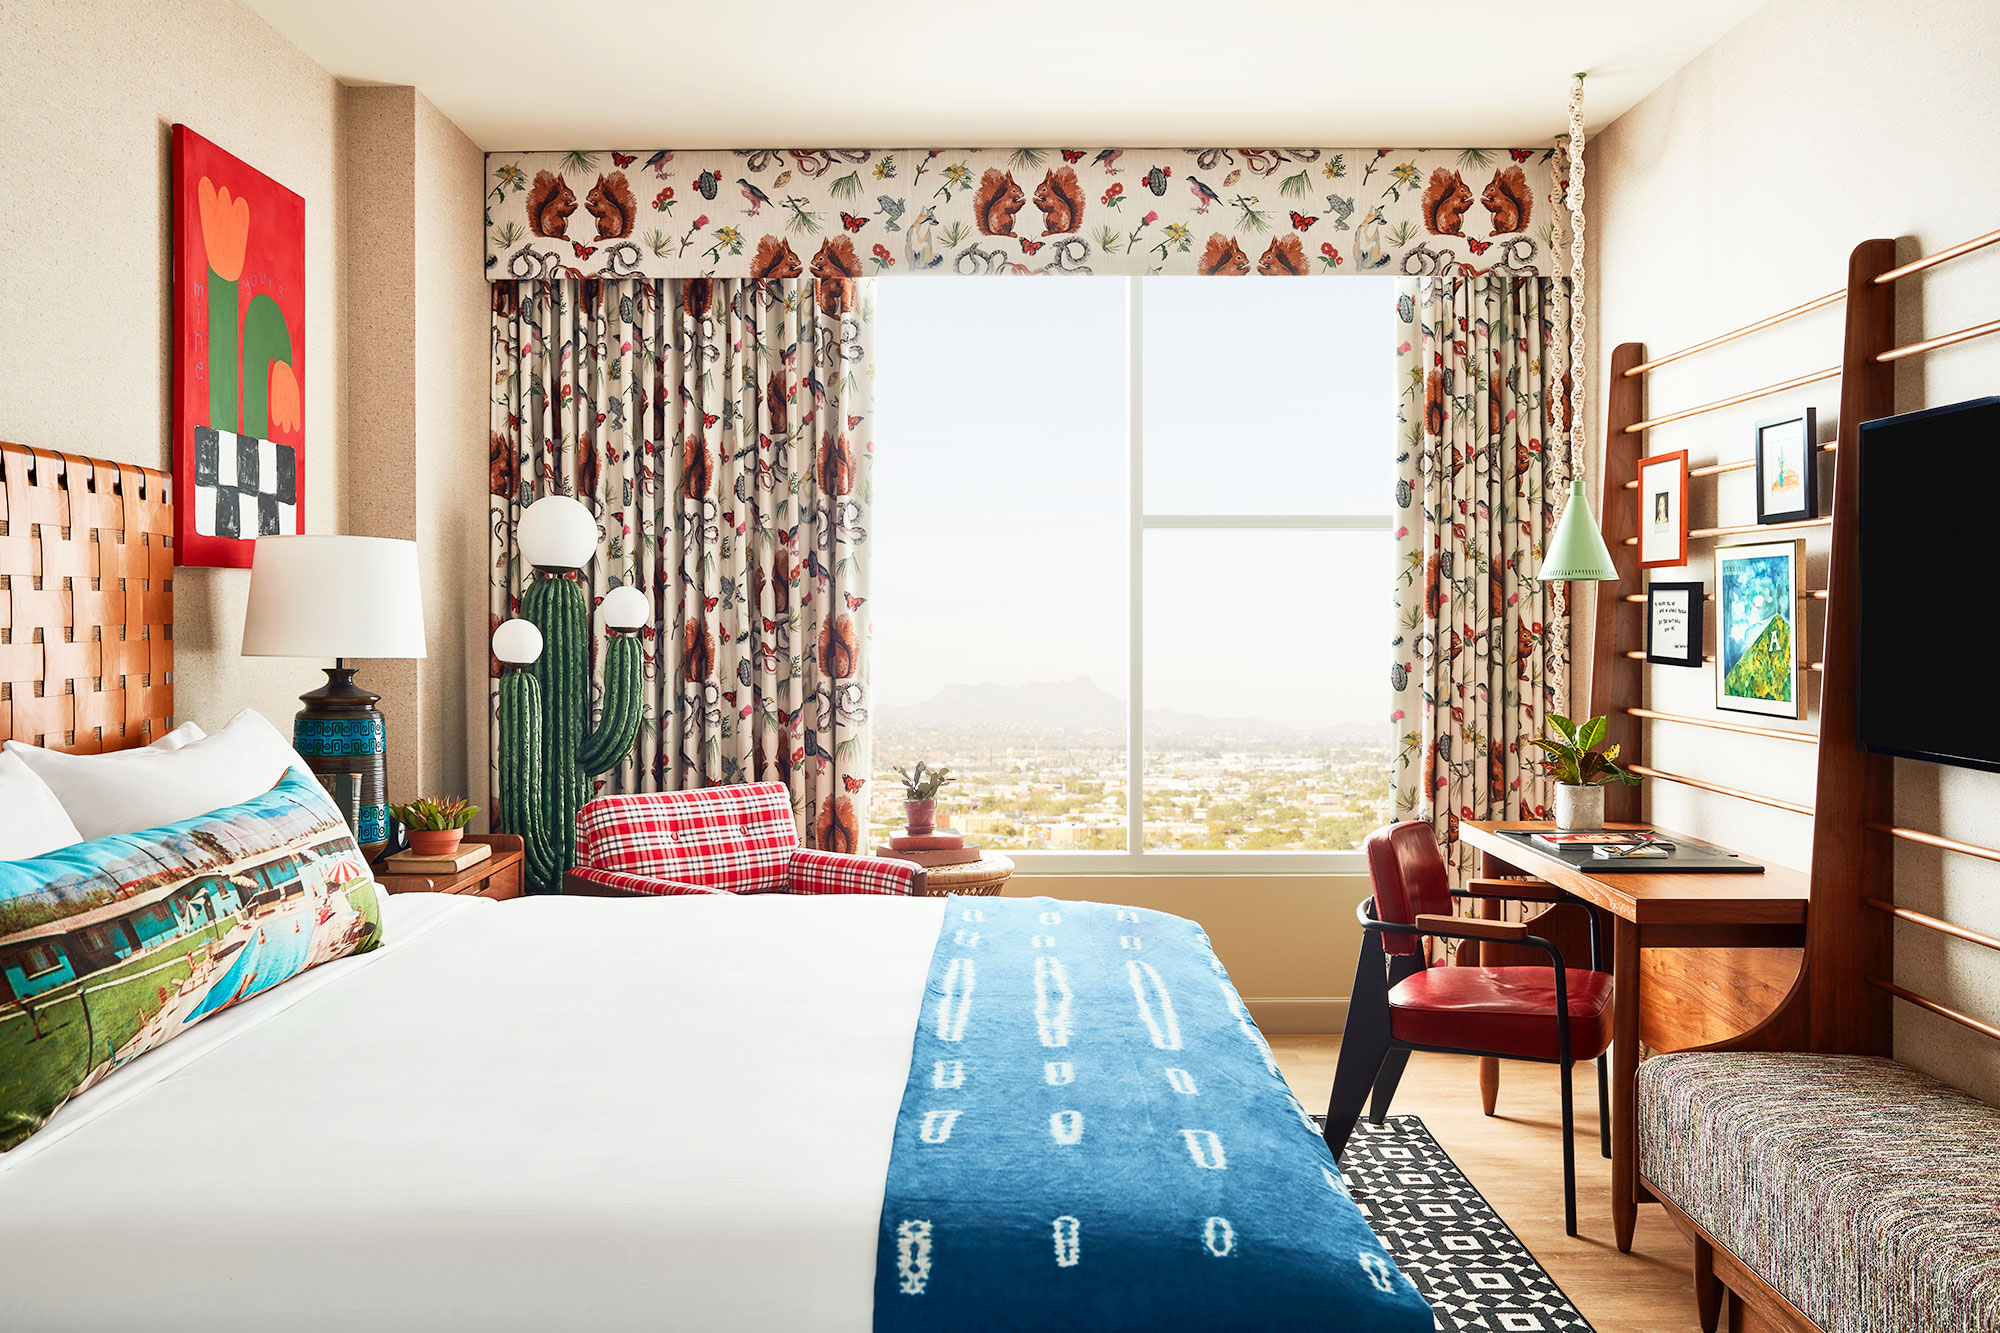 Graduate Hotels - Stephen Denton Photography, Los Angeles, California based interior & hospitality photographer